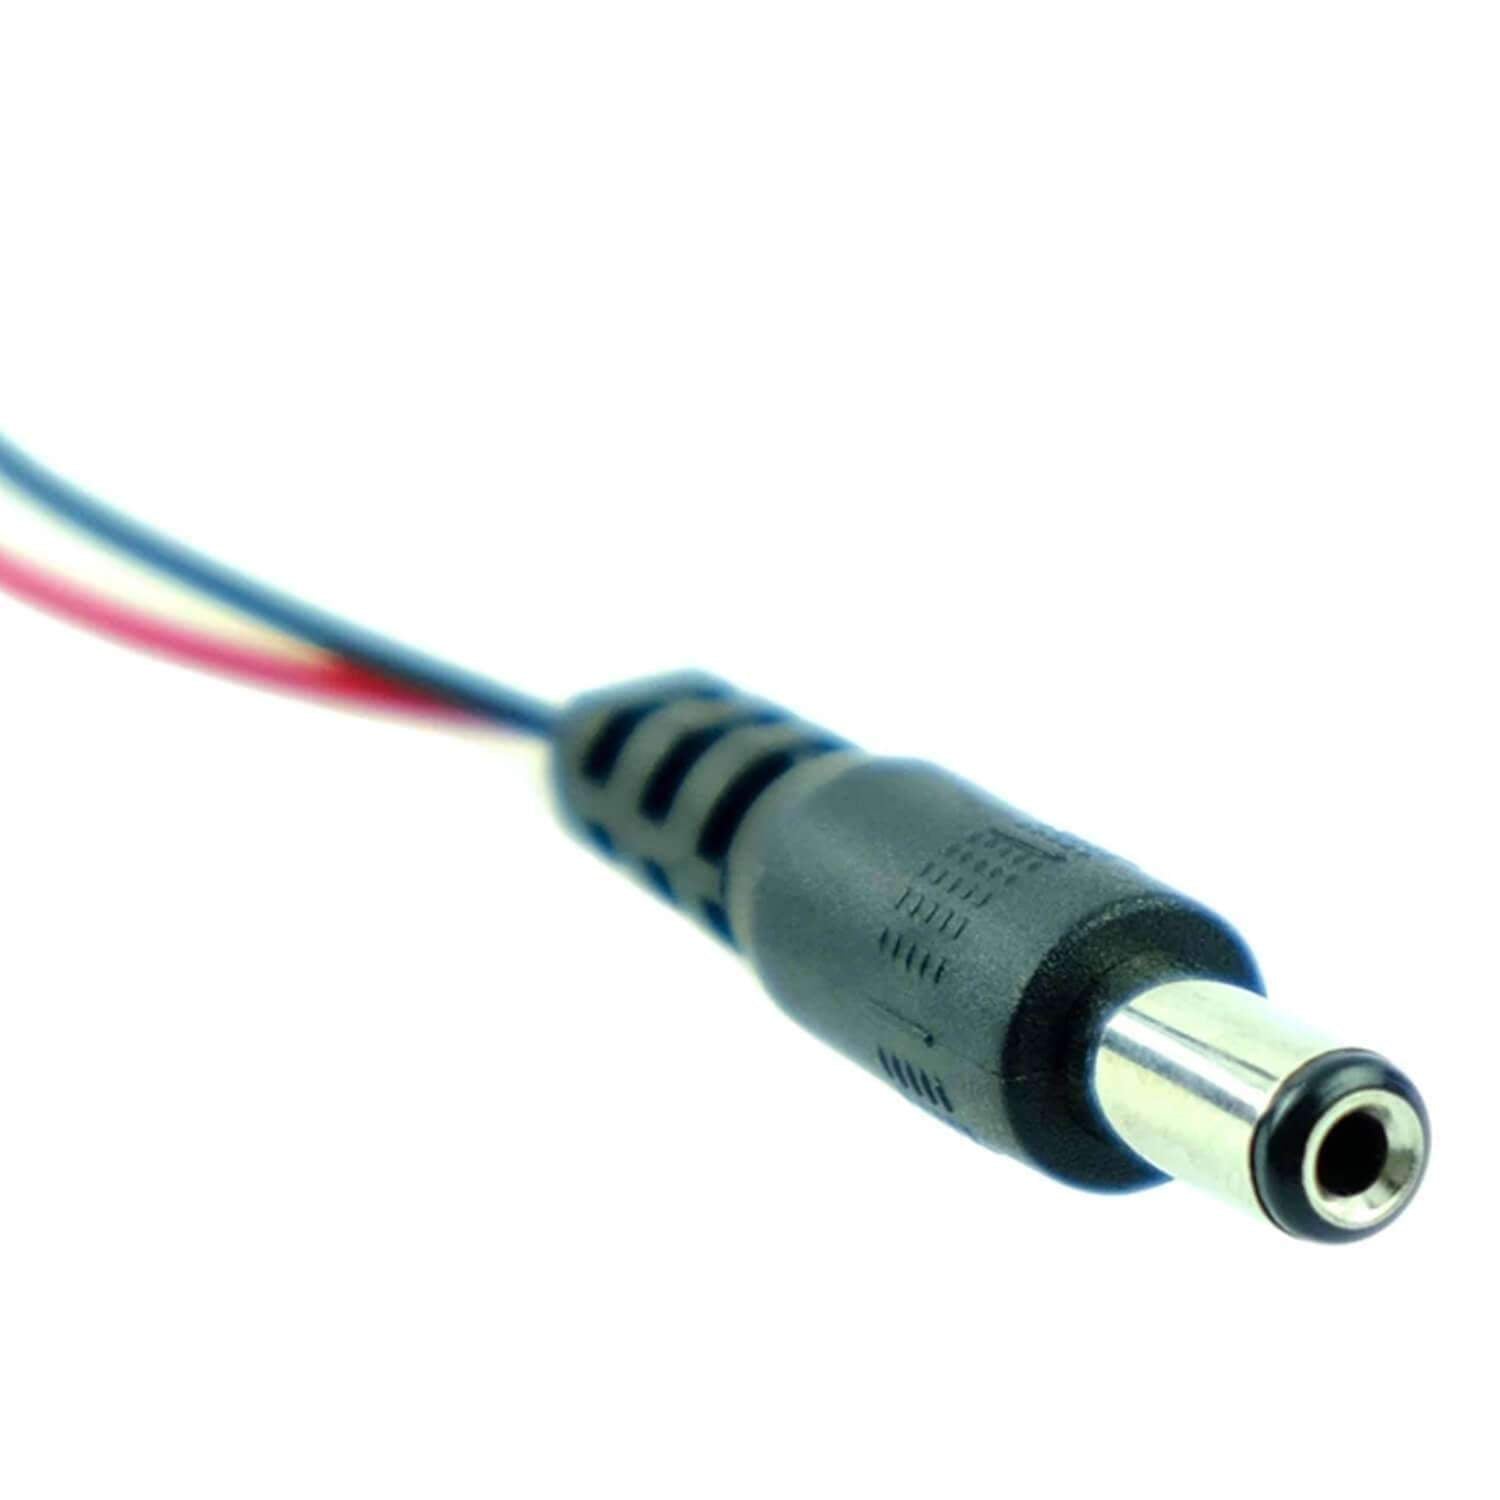 9V battery clip set of 10pcs I-type clip + 15cm connection cable